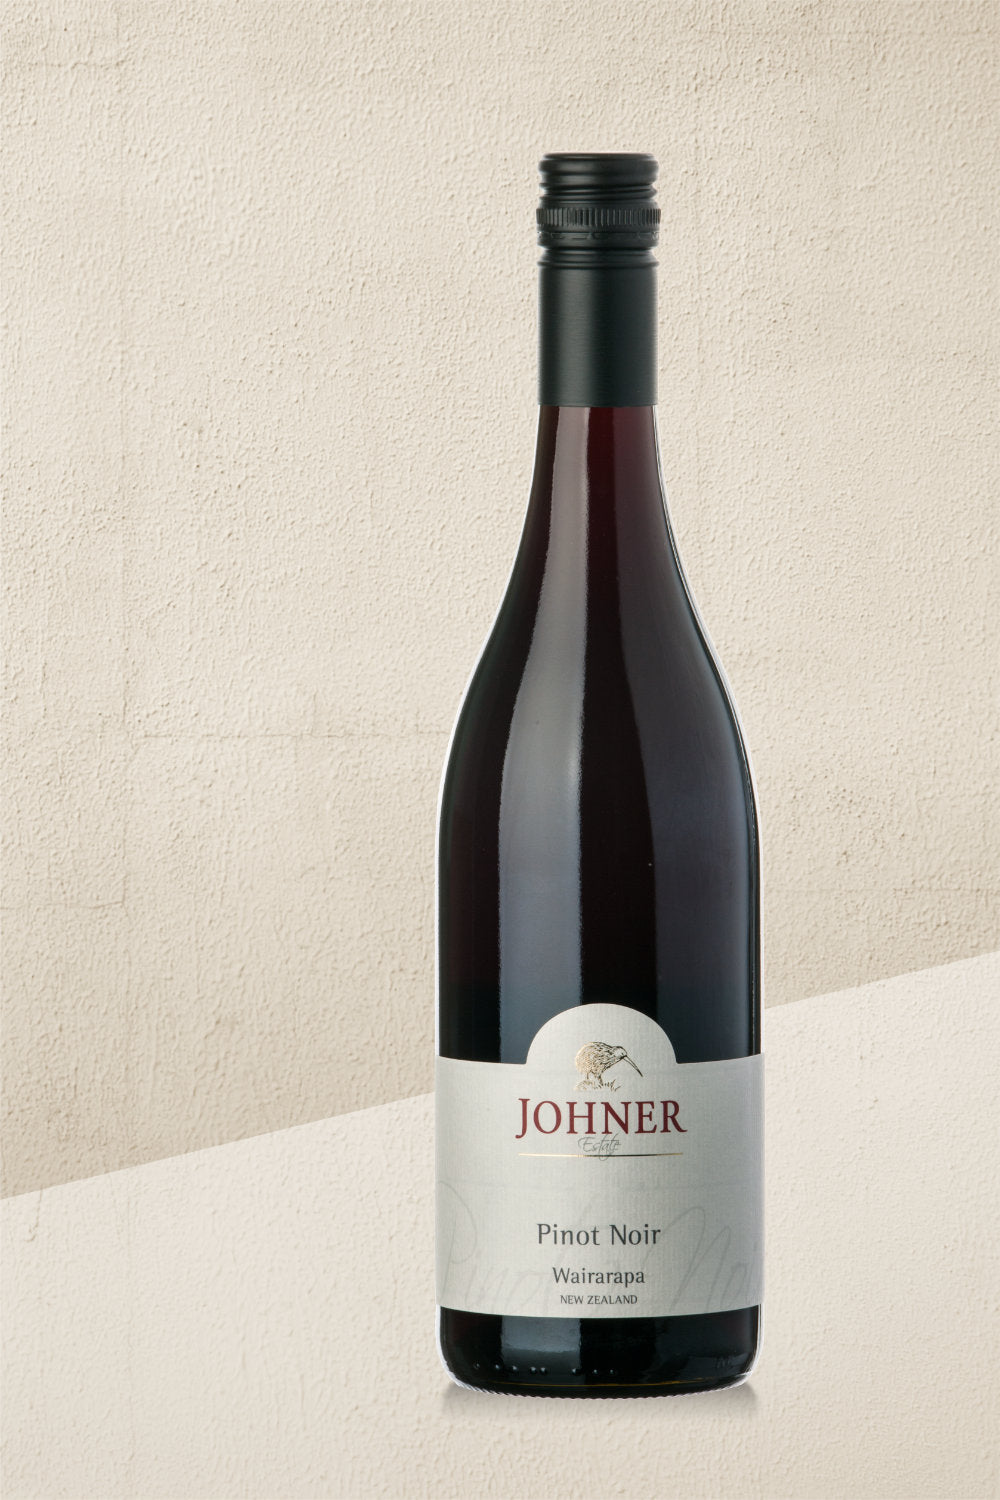 Johner Pinot Noir Wairarapa